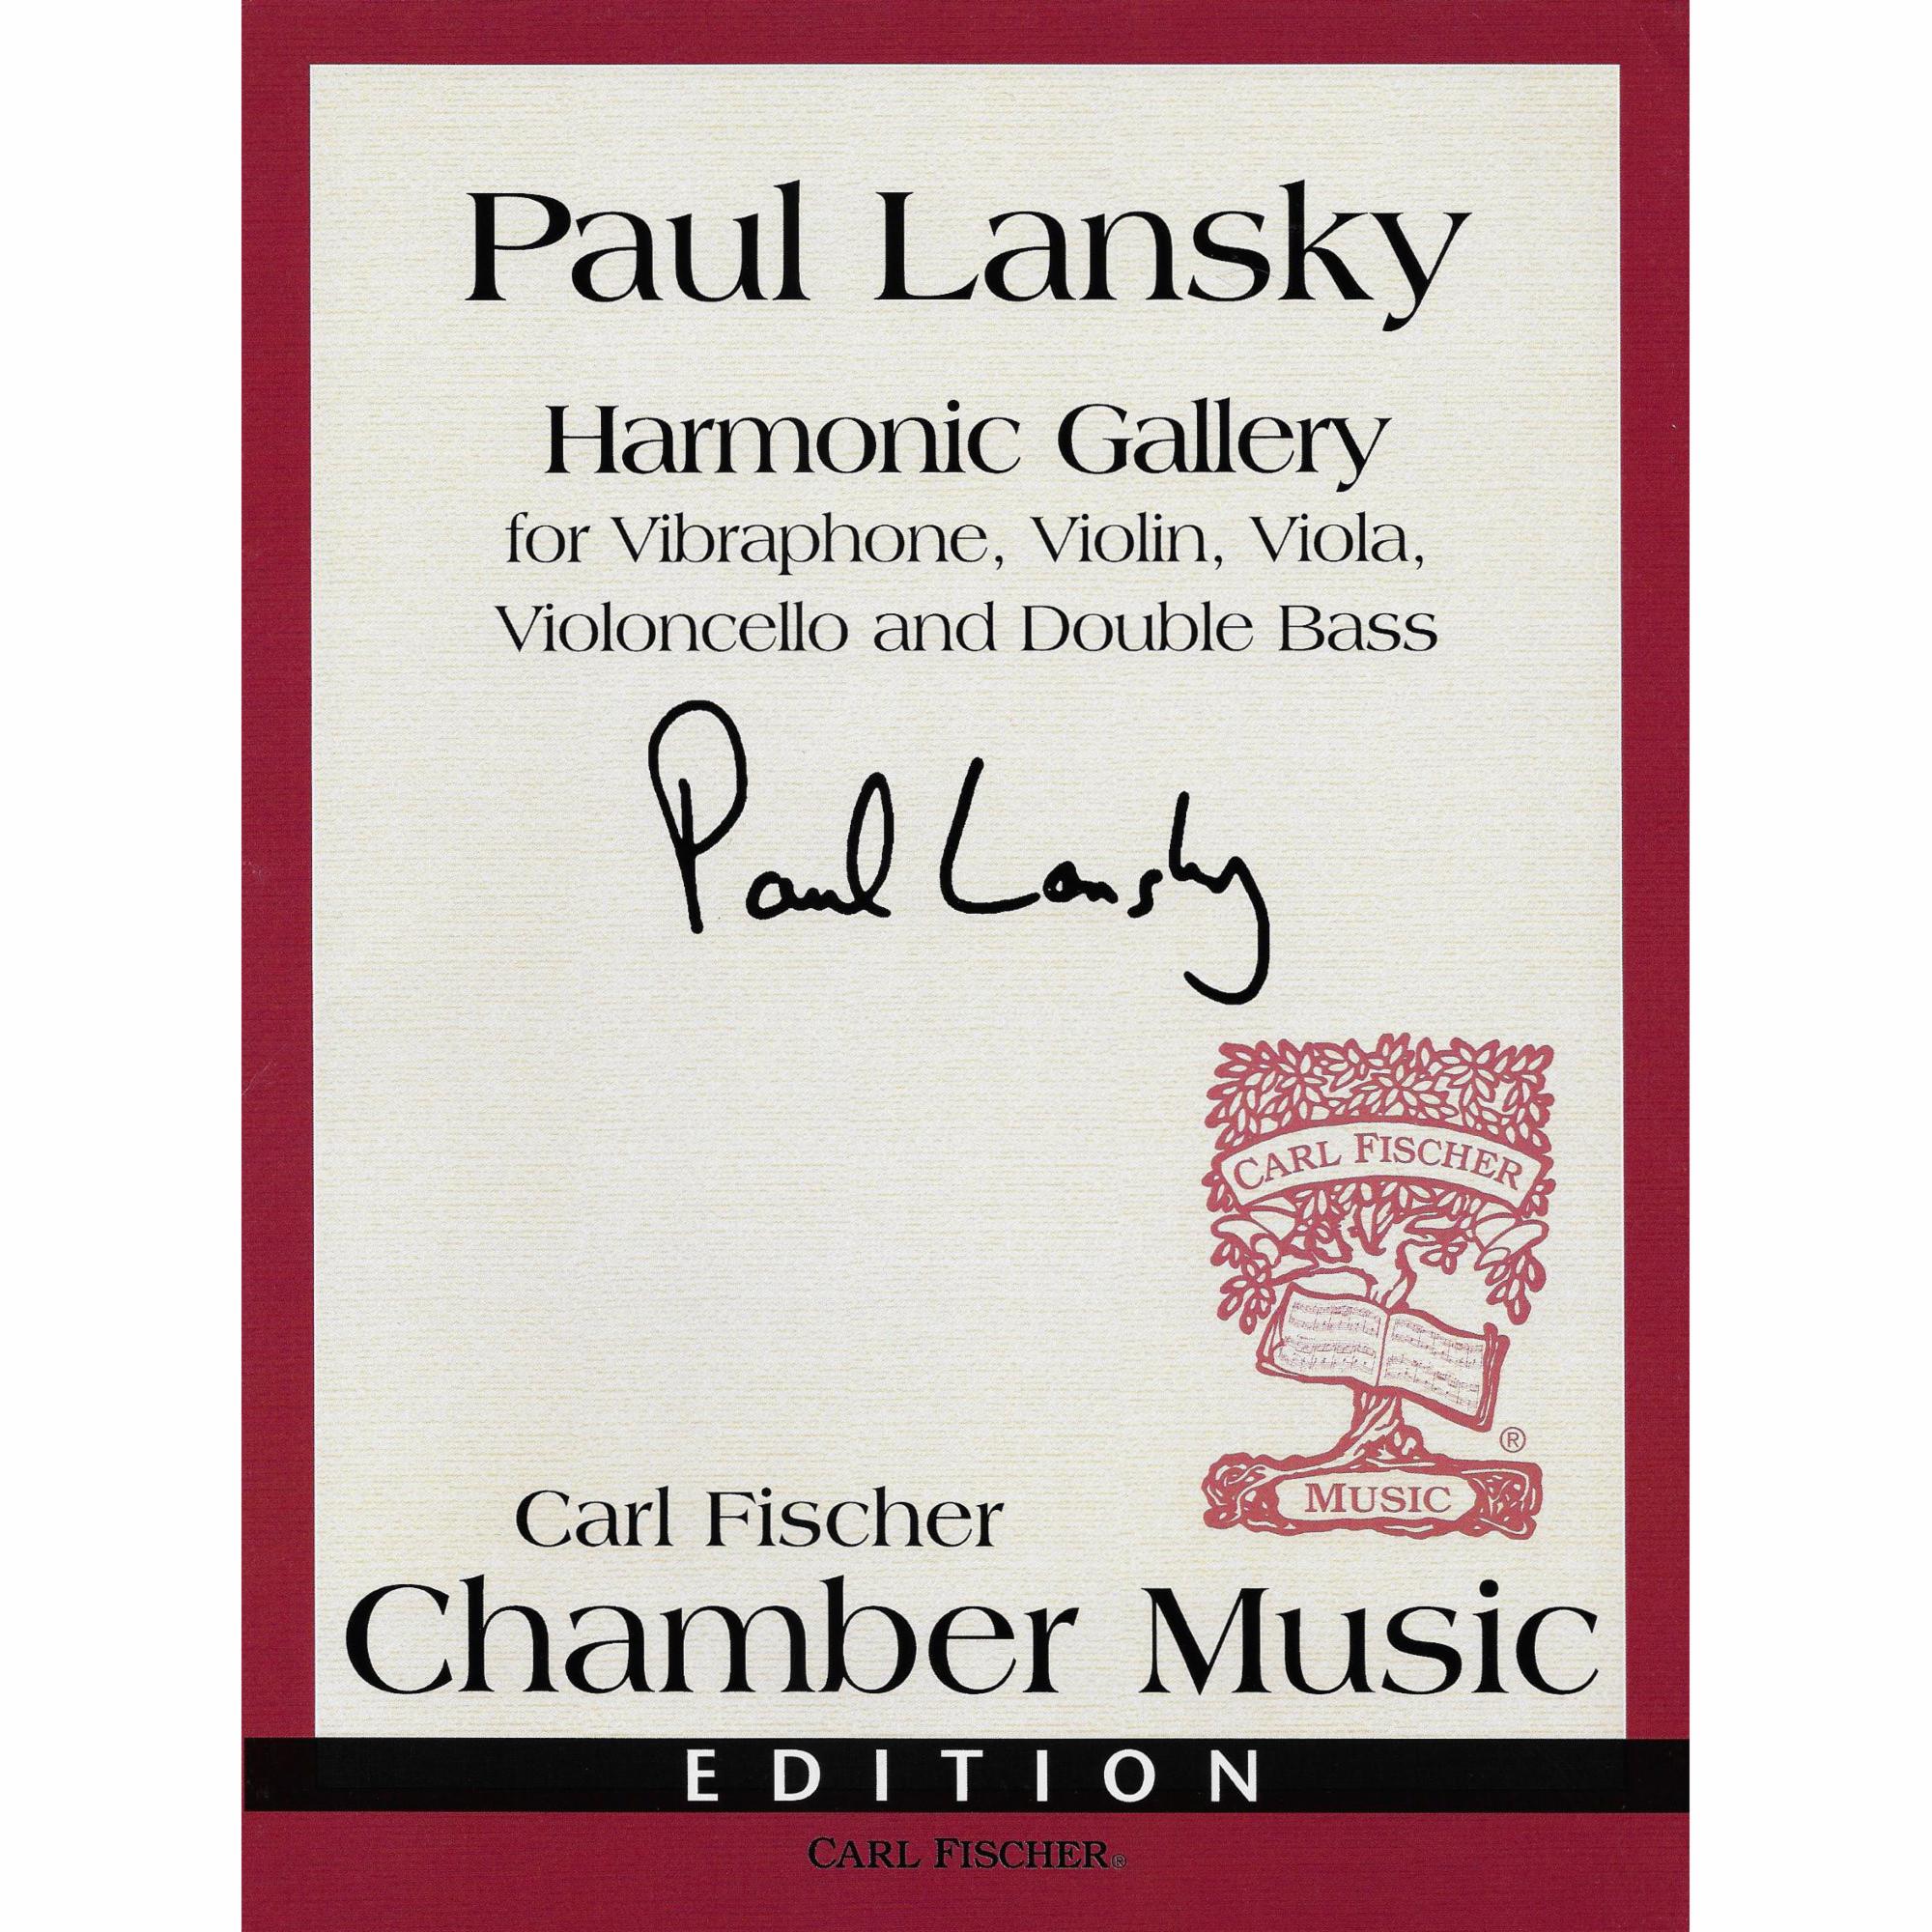 Lansky -- Harmonic Gallery for Vibraphone, Violin, Viola, Cello, and Bass 